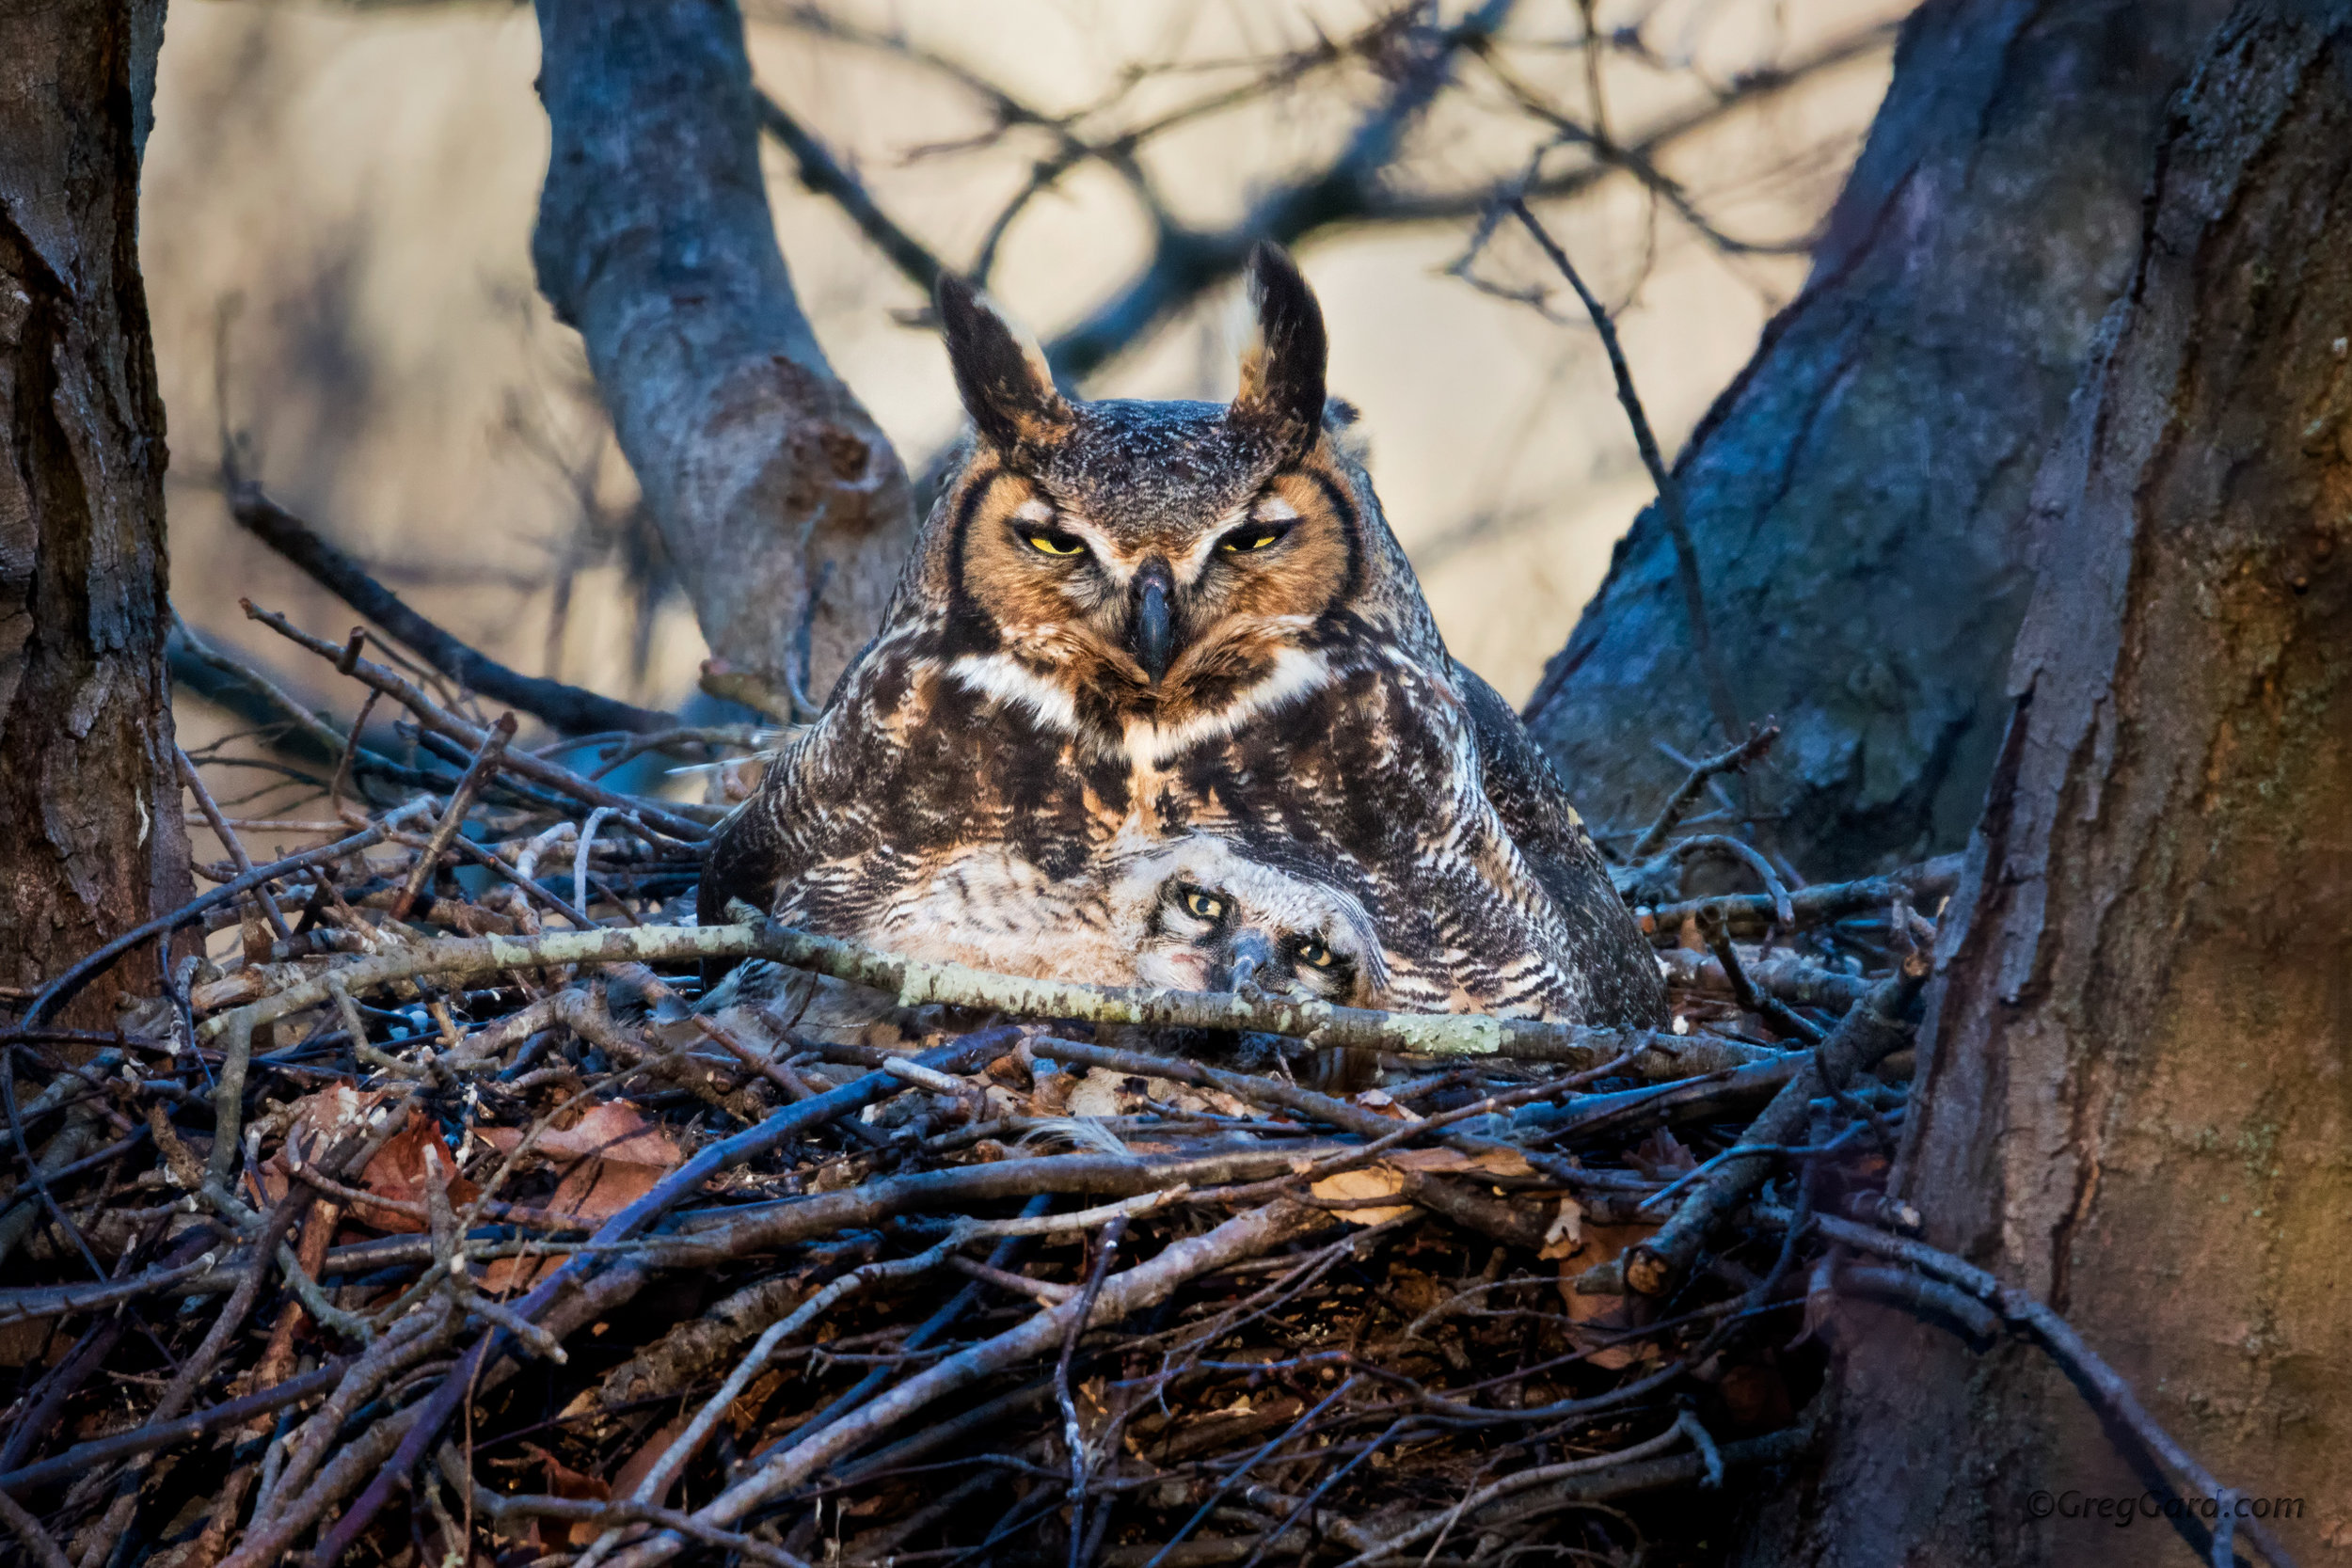 Great Horned Owl in the nest